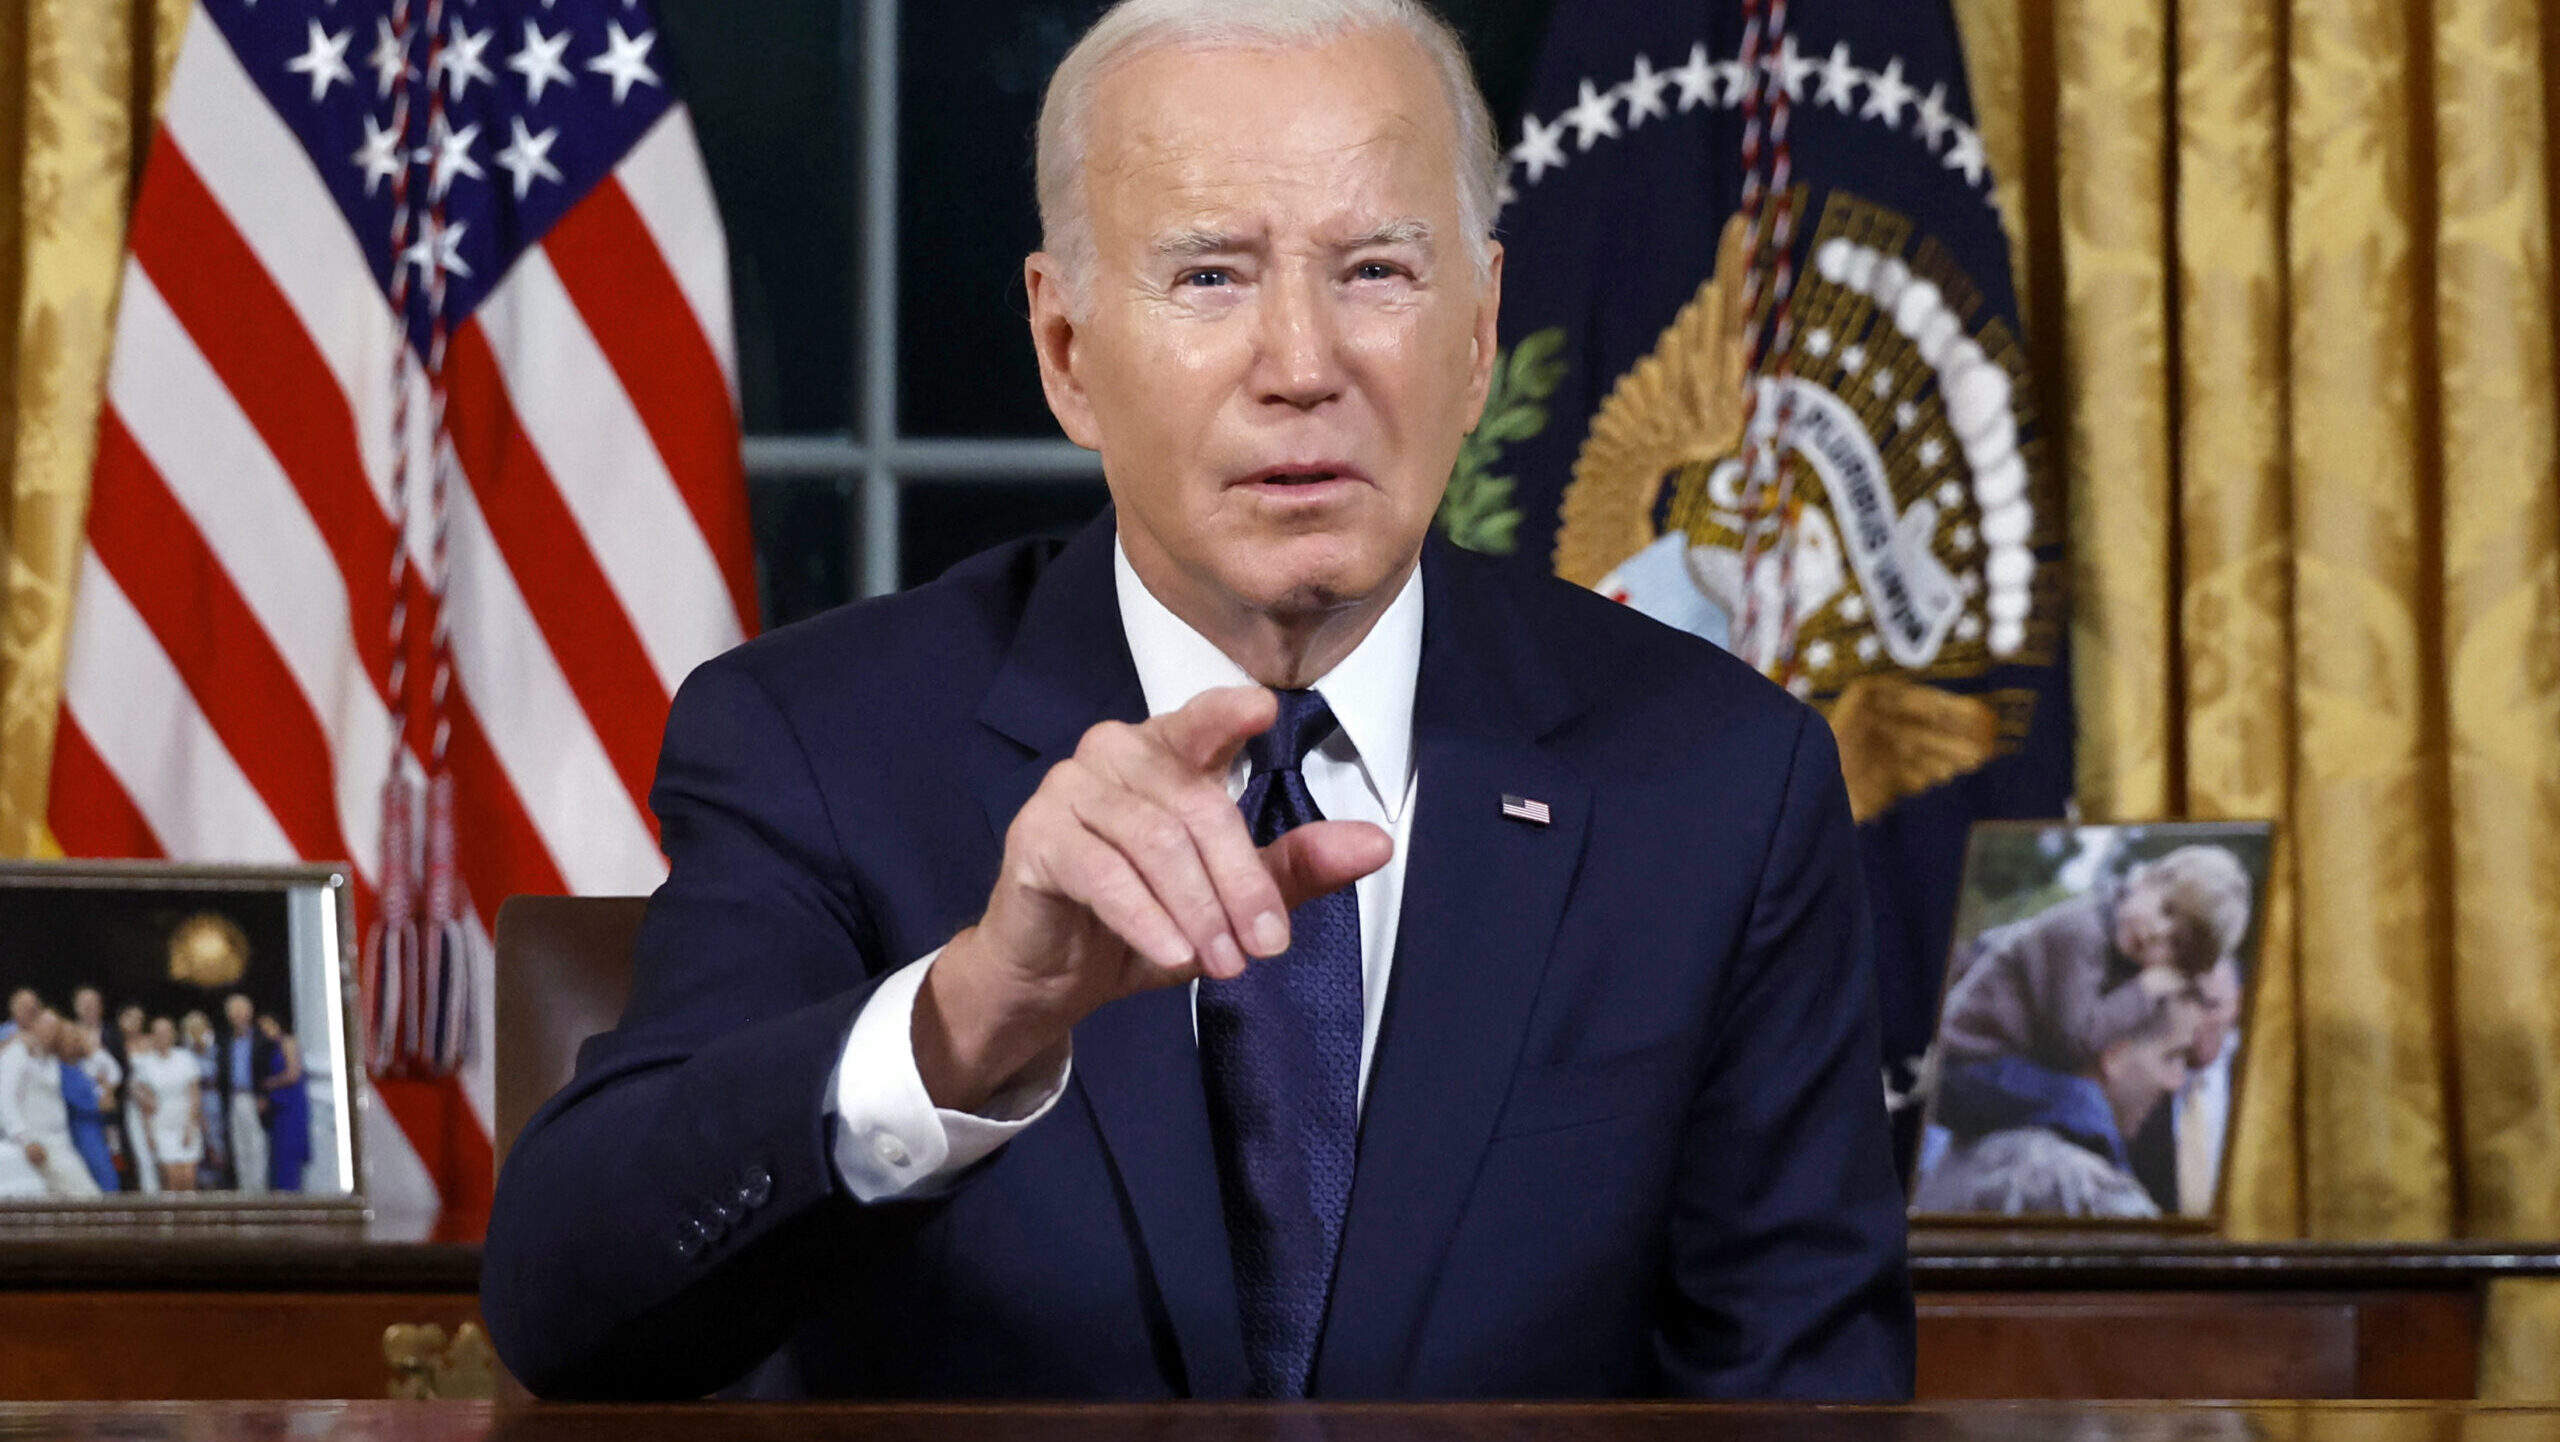 Presidential Address: Biden Tells Americans Russia ‘Annihilating Democracies’